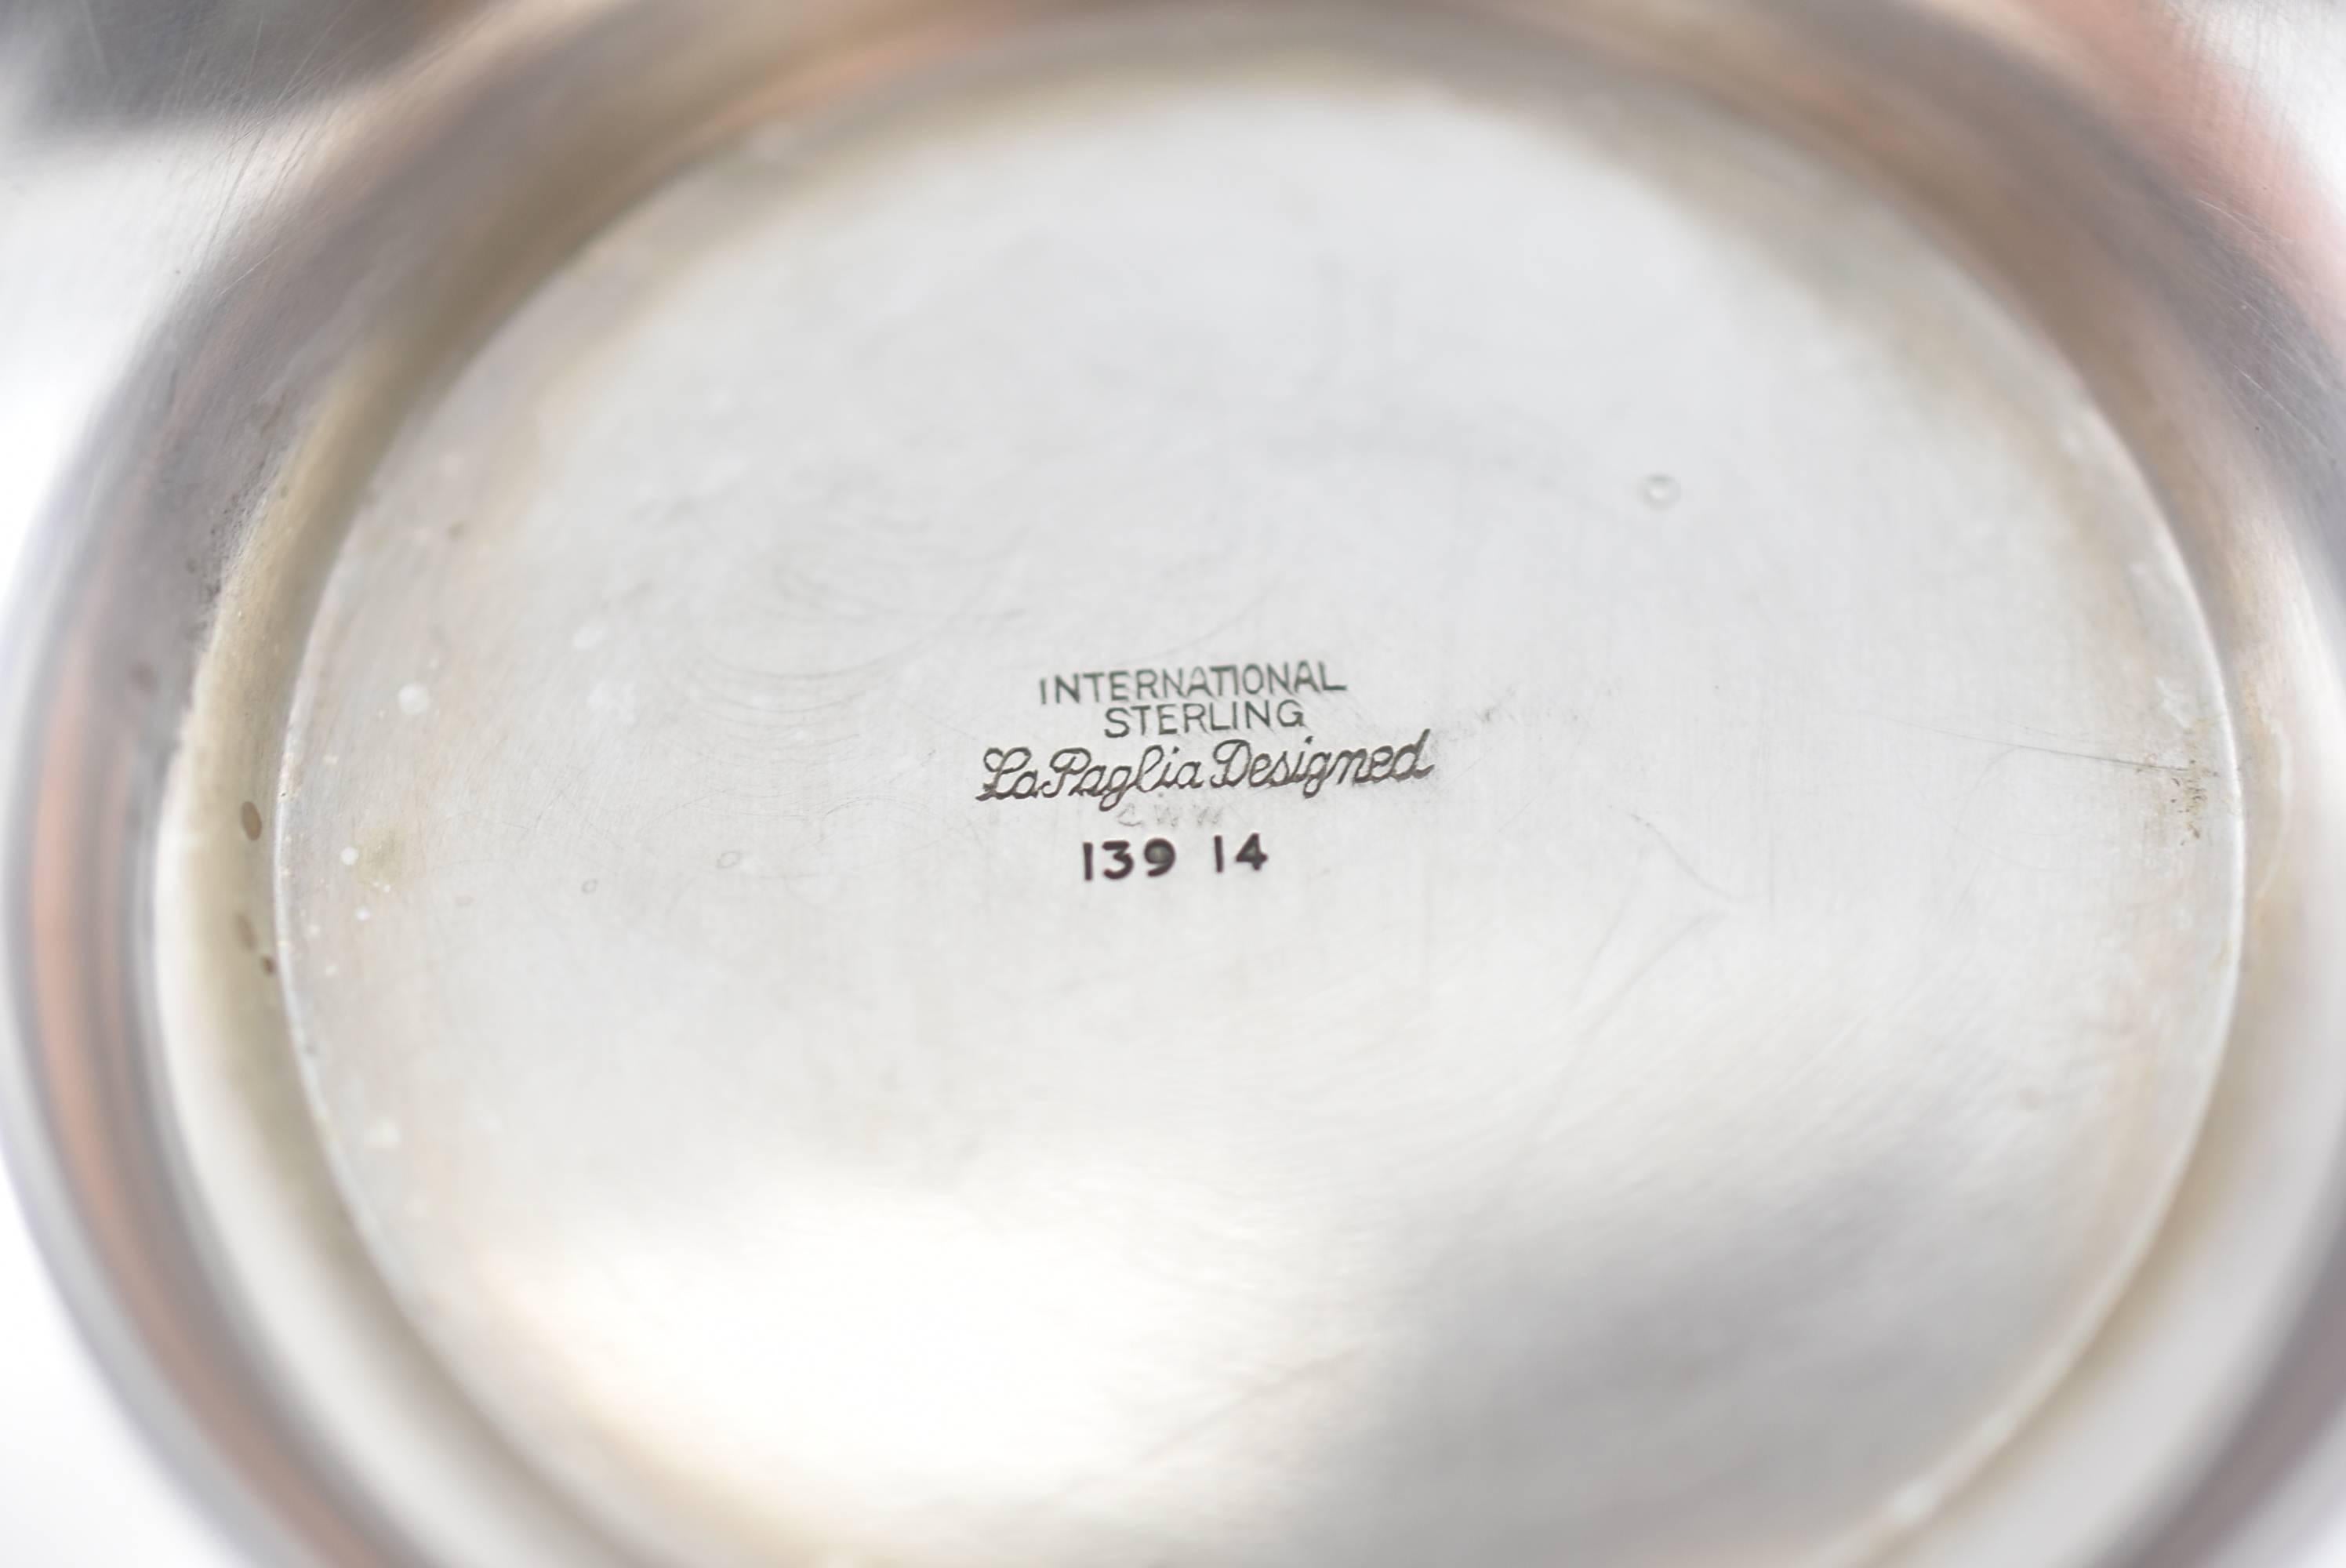 American Sterling Silver Bowl by Georg Jensen Designer Lapaglia for International 